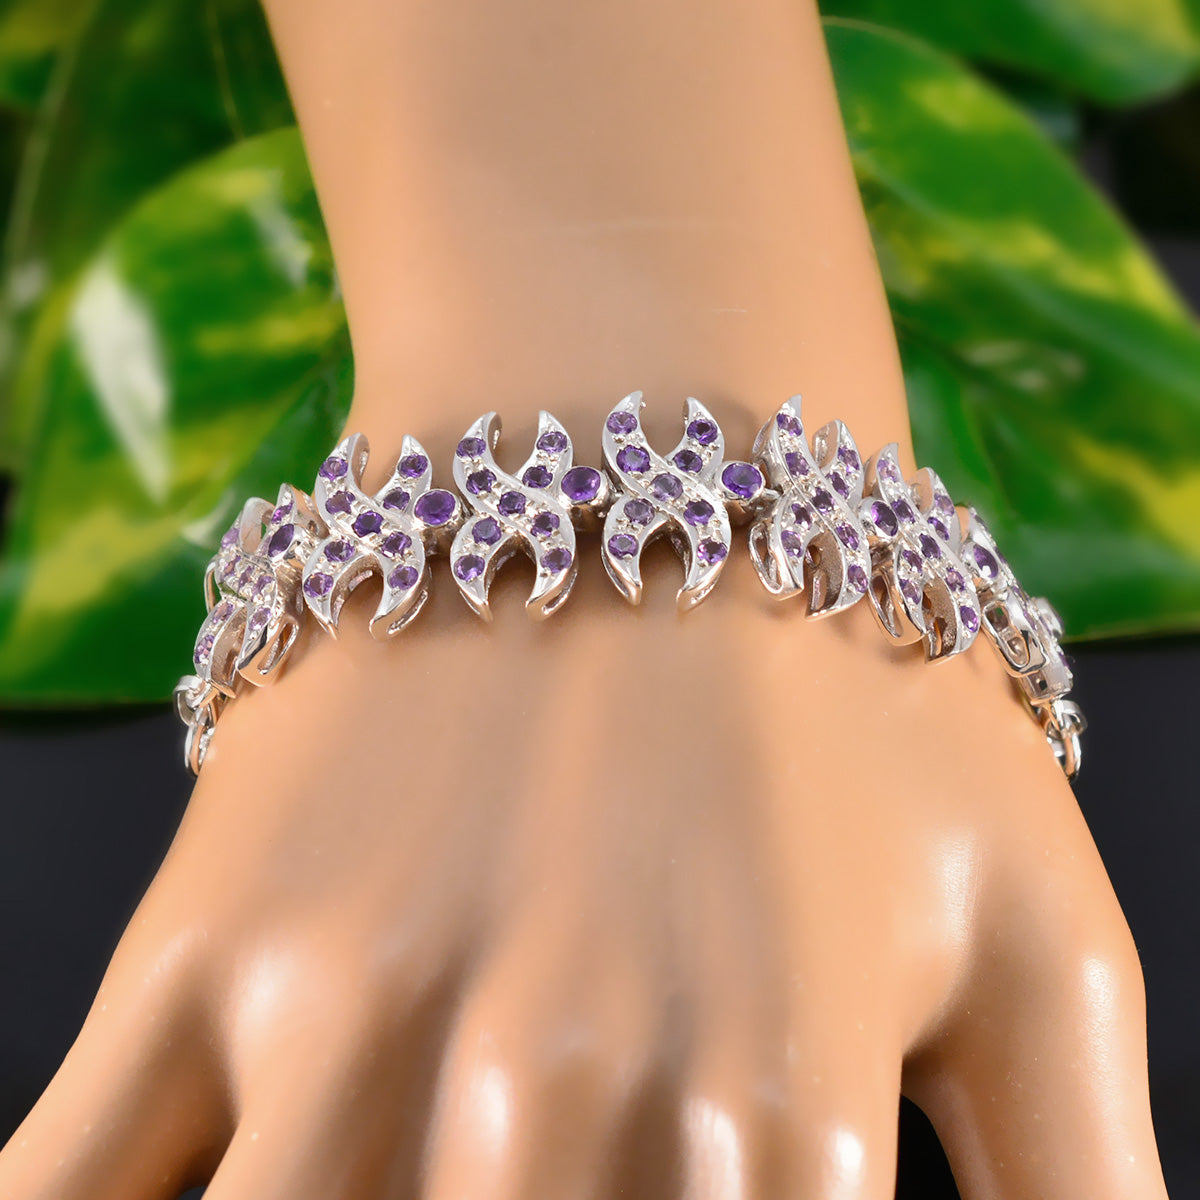 Riyo India 925 Sterling Silver Bracelet For Girls Amethyst Bracelet Bezel Setting Bracelet with Fish Hook Charm Bracelet L Size 6-8.5 Inch.